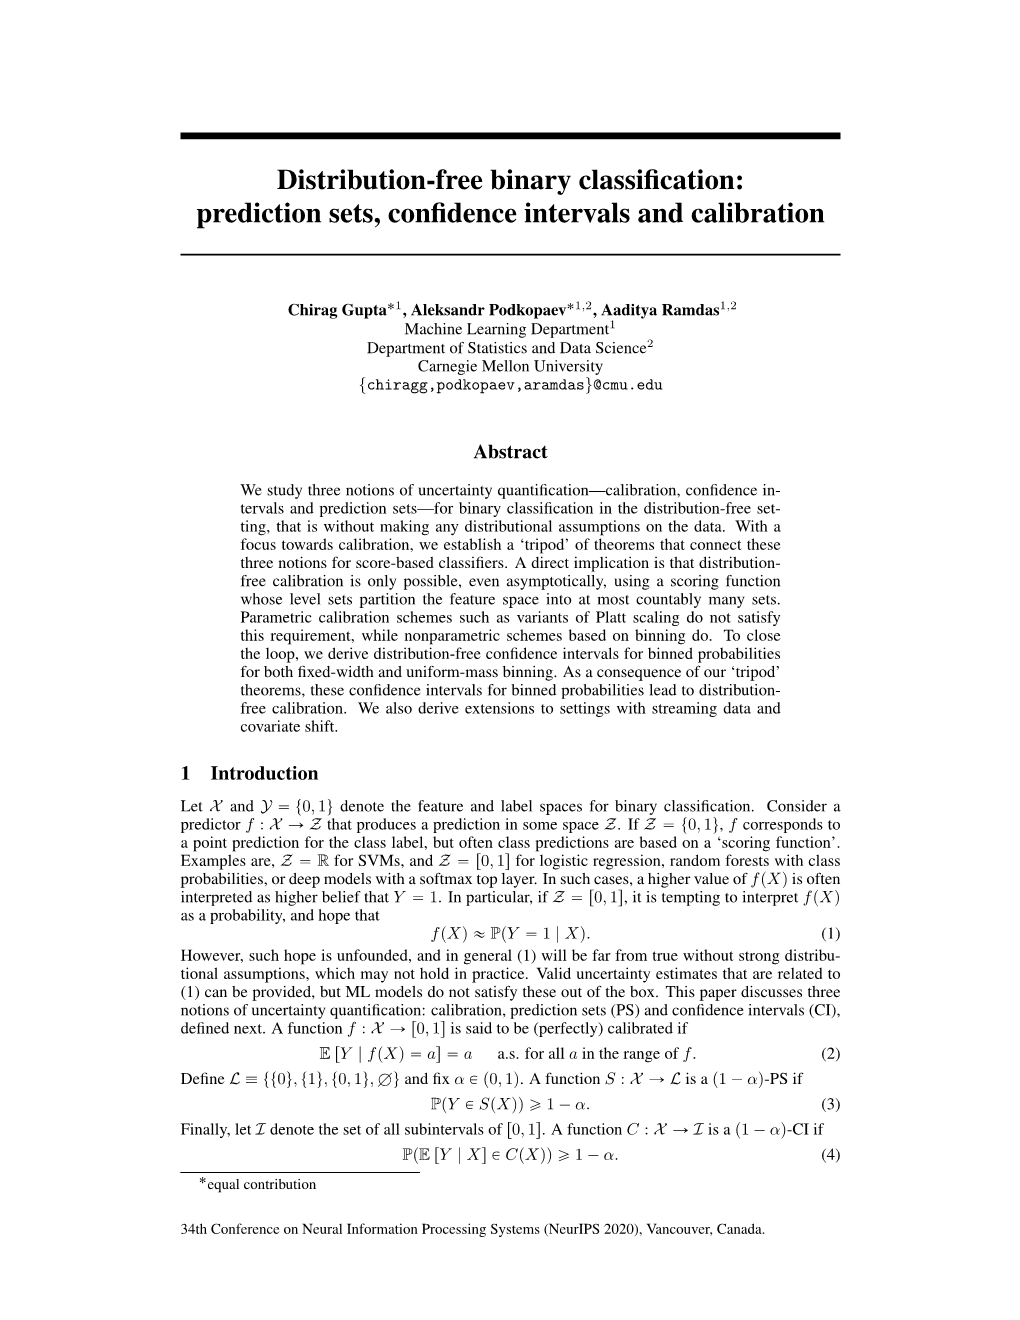 Distribution-Free Binary Classification